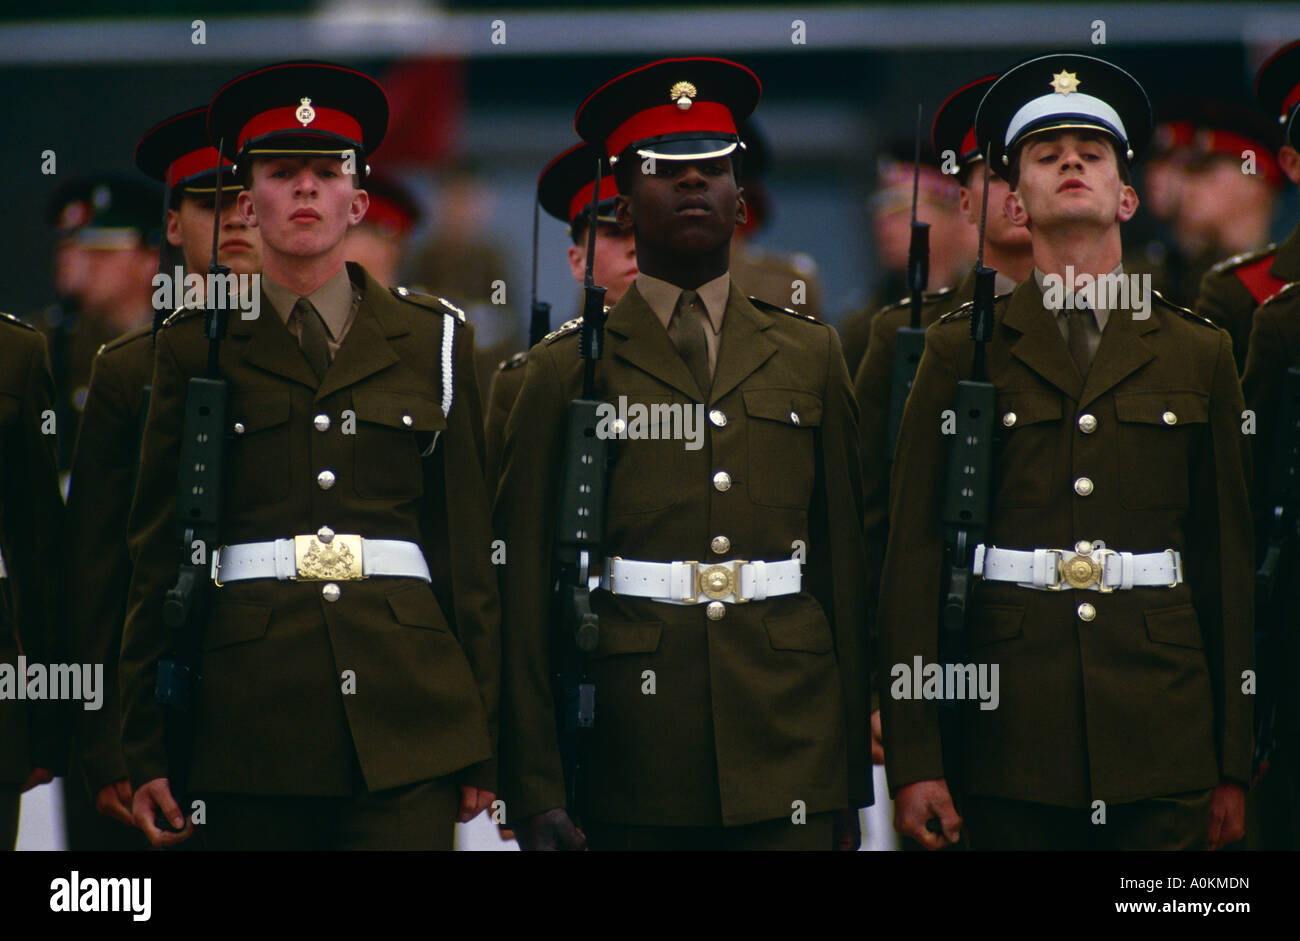 Dress uniform british hi-res stock photography and images - Alamy